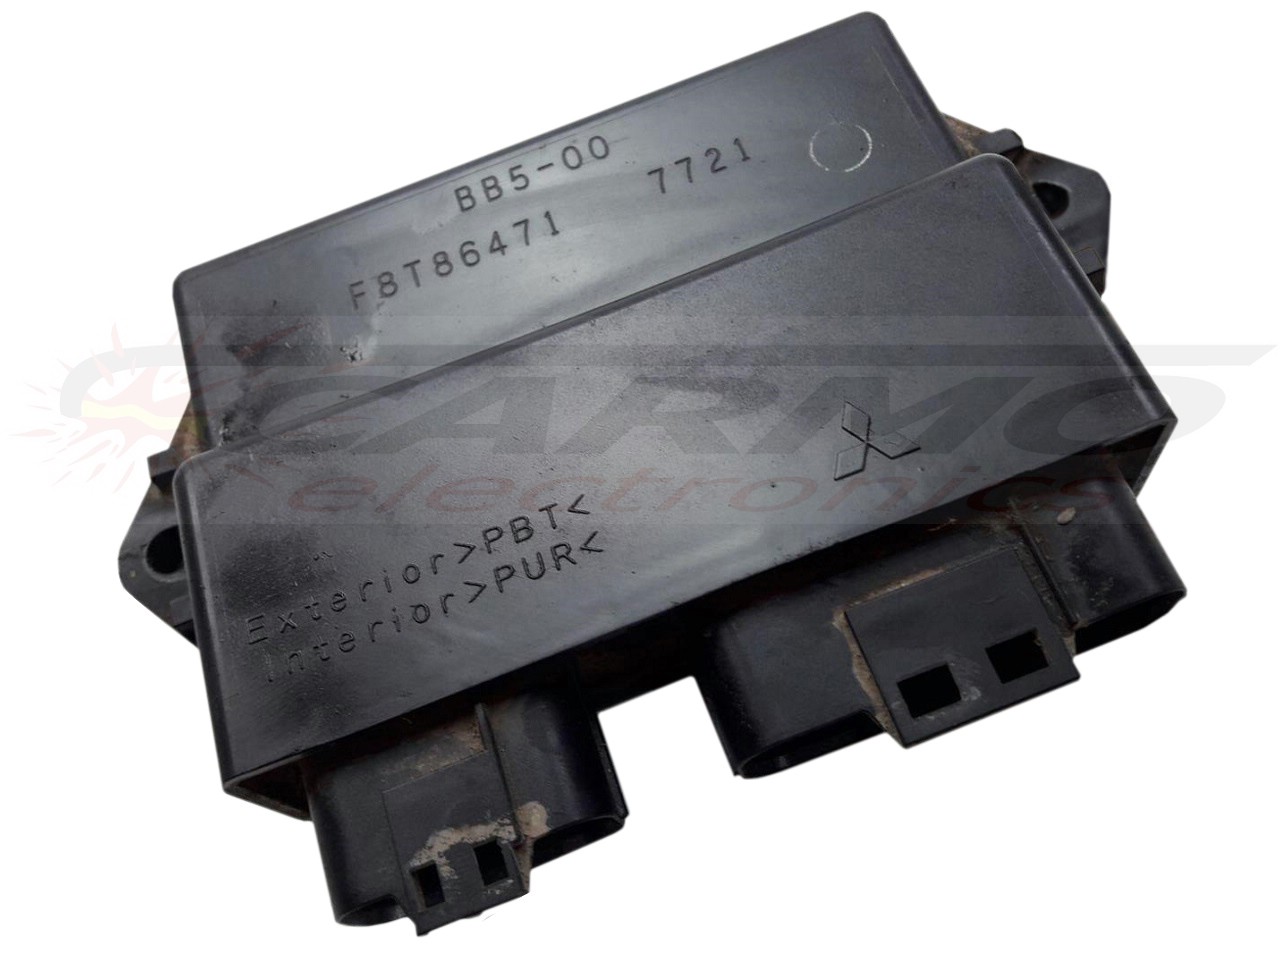 YFM450 Kodiak (BB5-00, F8T86471) igniter ignition module CDI Box